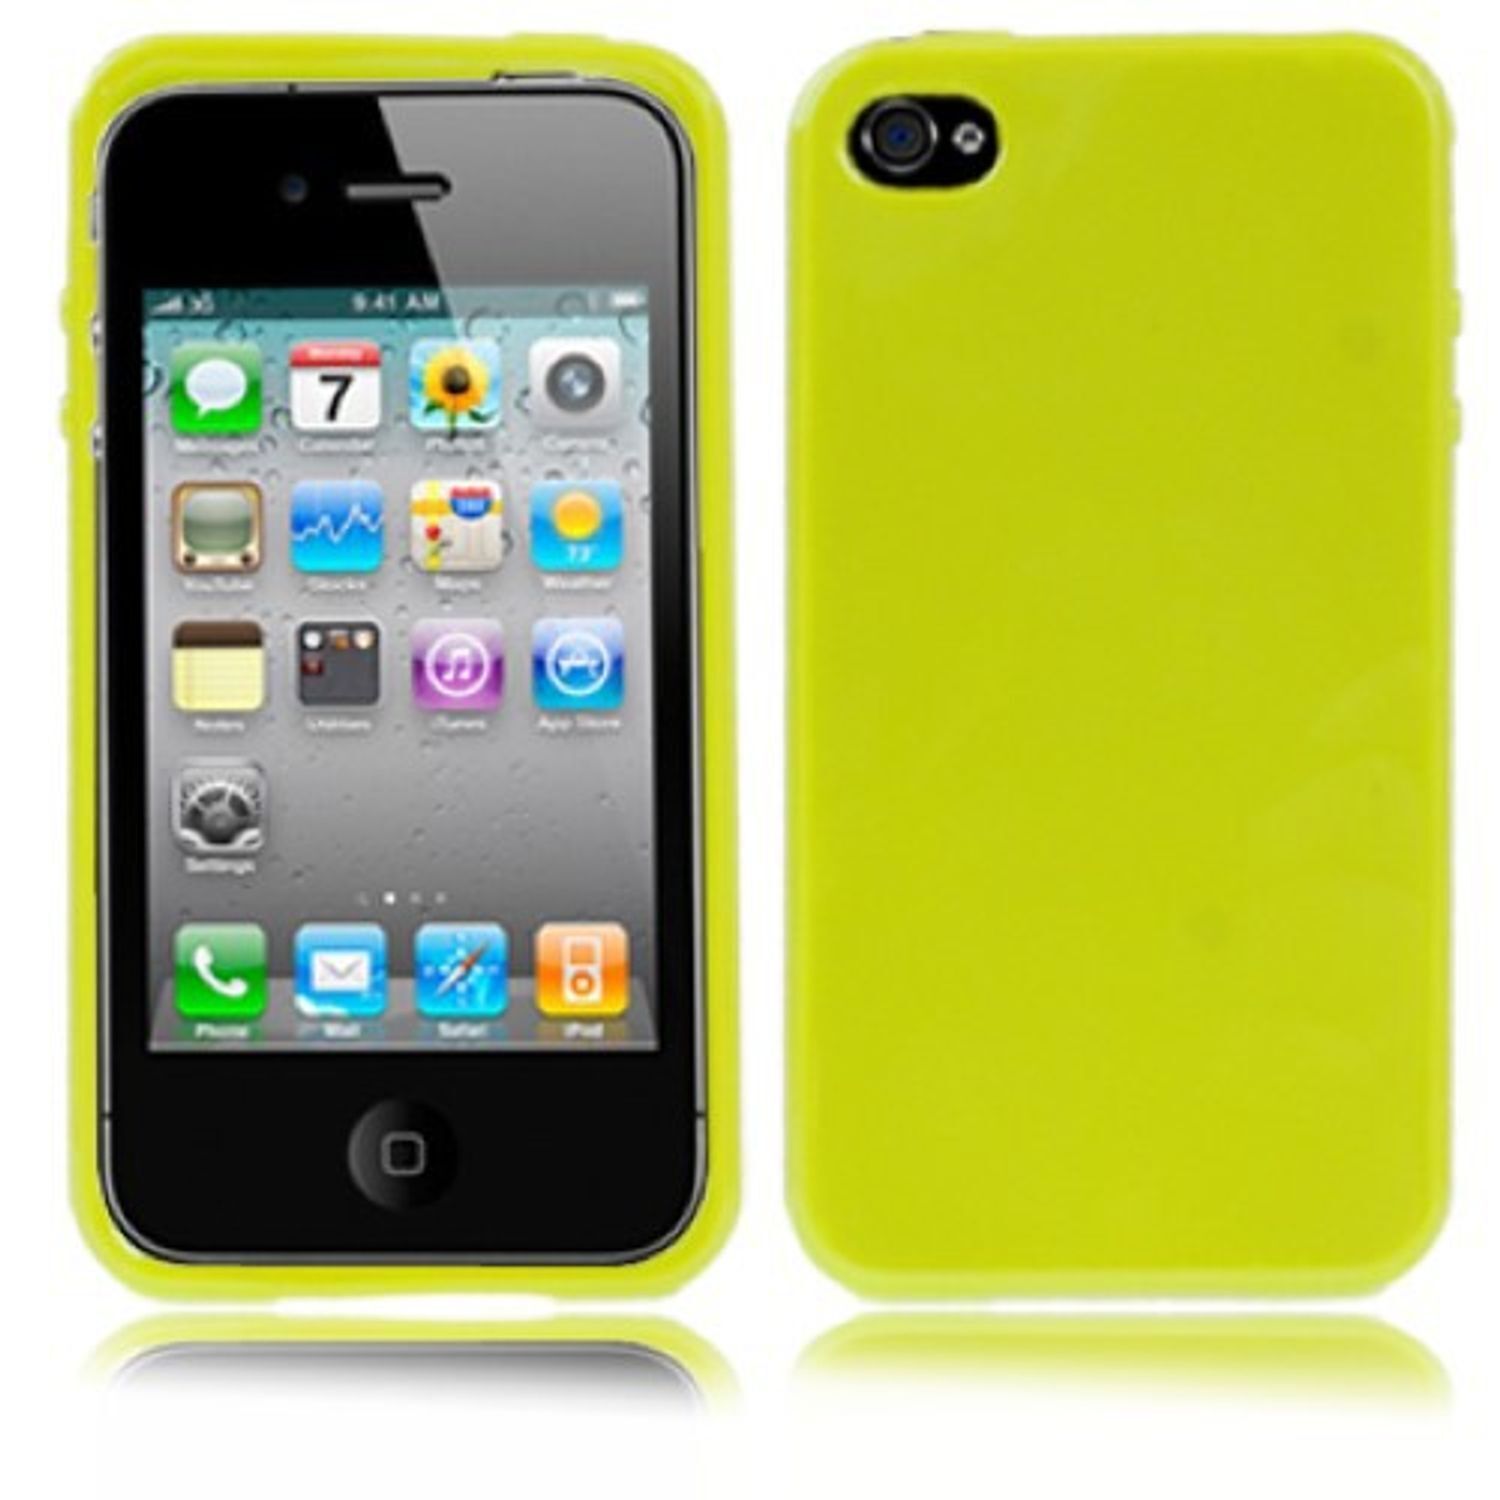 Overfrakke Medfølelse Editor Cell Phone Case Protective Case Cover Bumper for Phone Apple IPHONE 4s & 4  4251090536863 | eBay